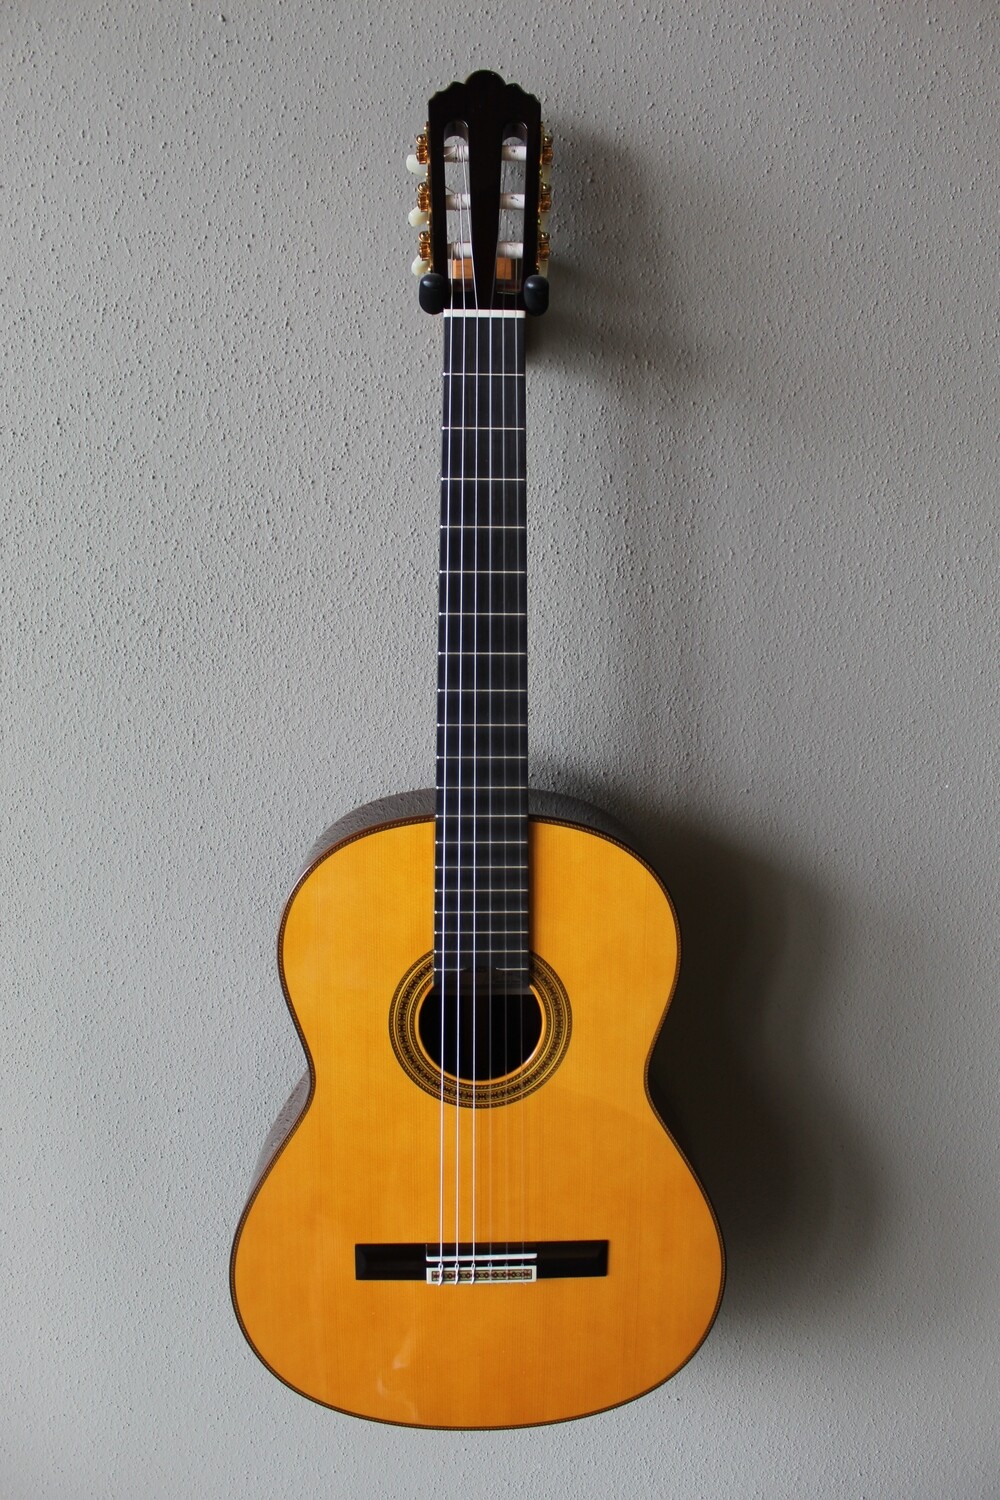 Yamaha GC42S Nylon String Classical Guitar - Made in Japan